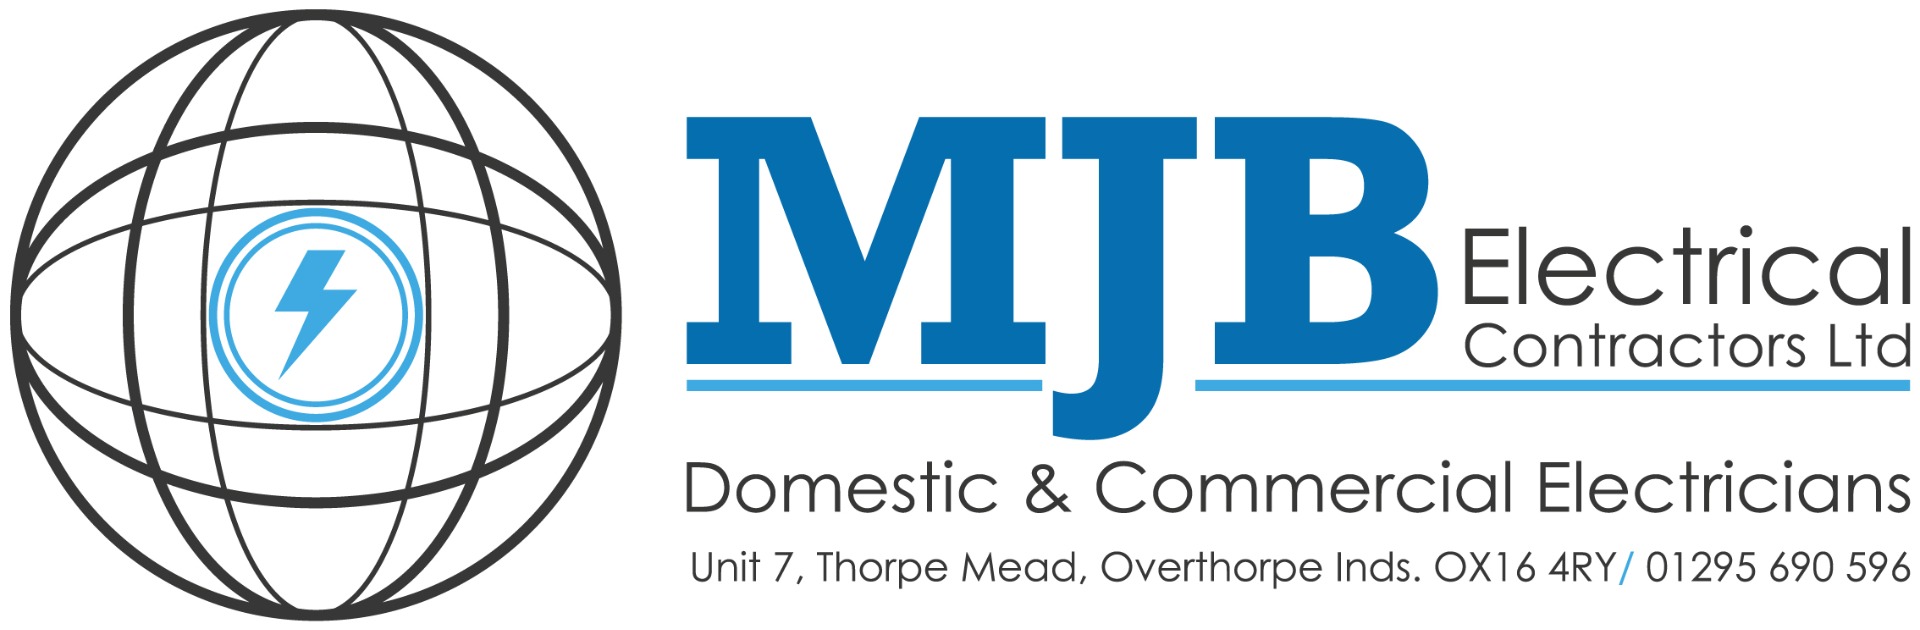 mjb logo